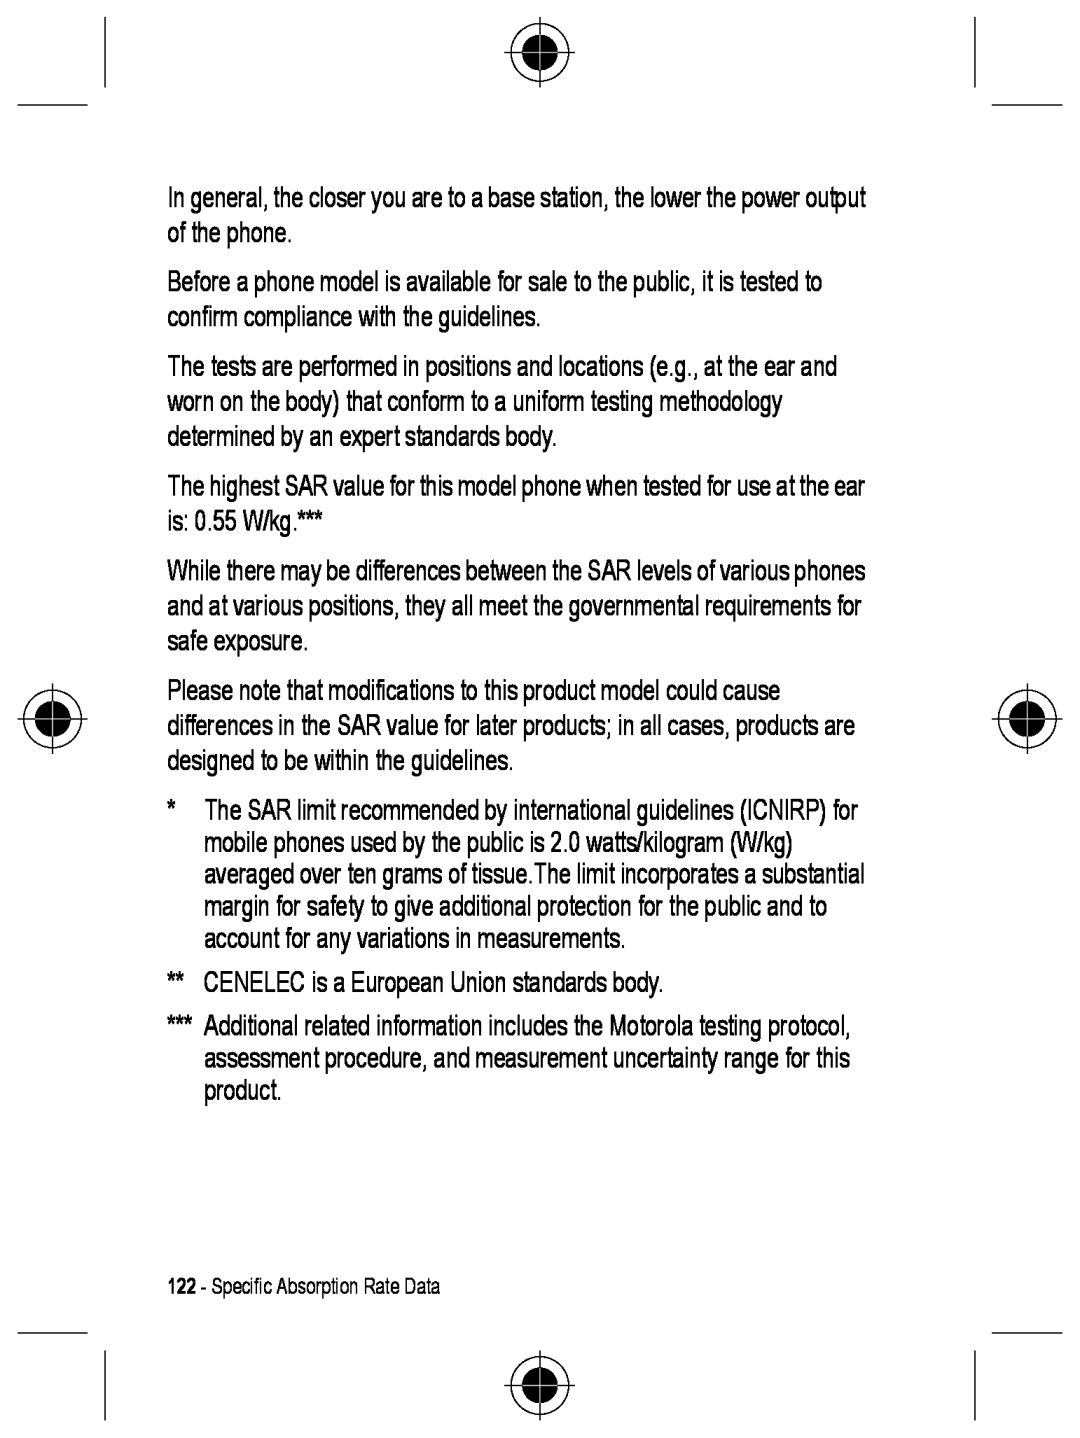 Motorola C330 manual CENELEC is a European Union standards body 